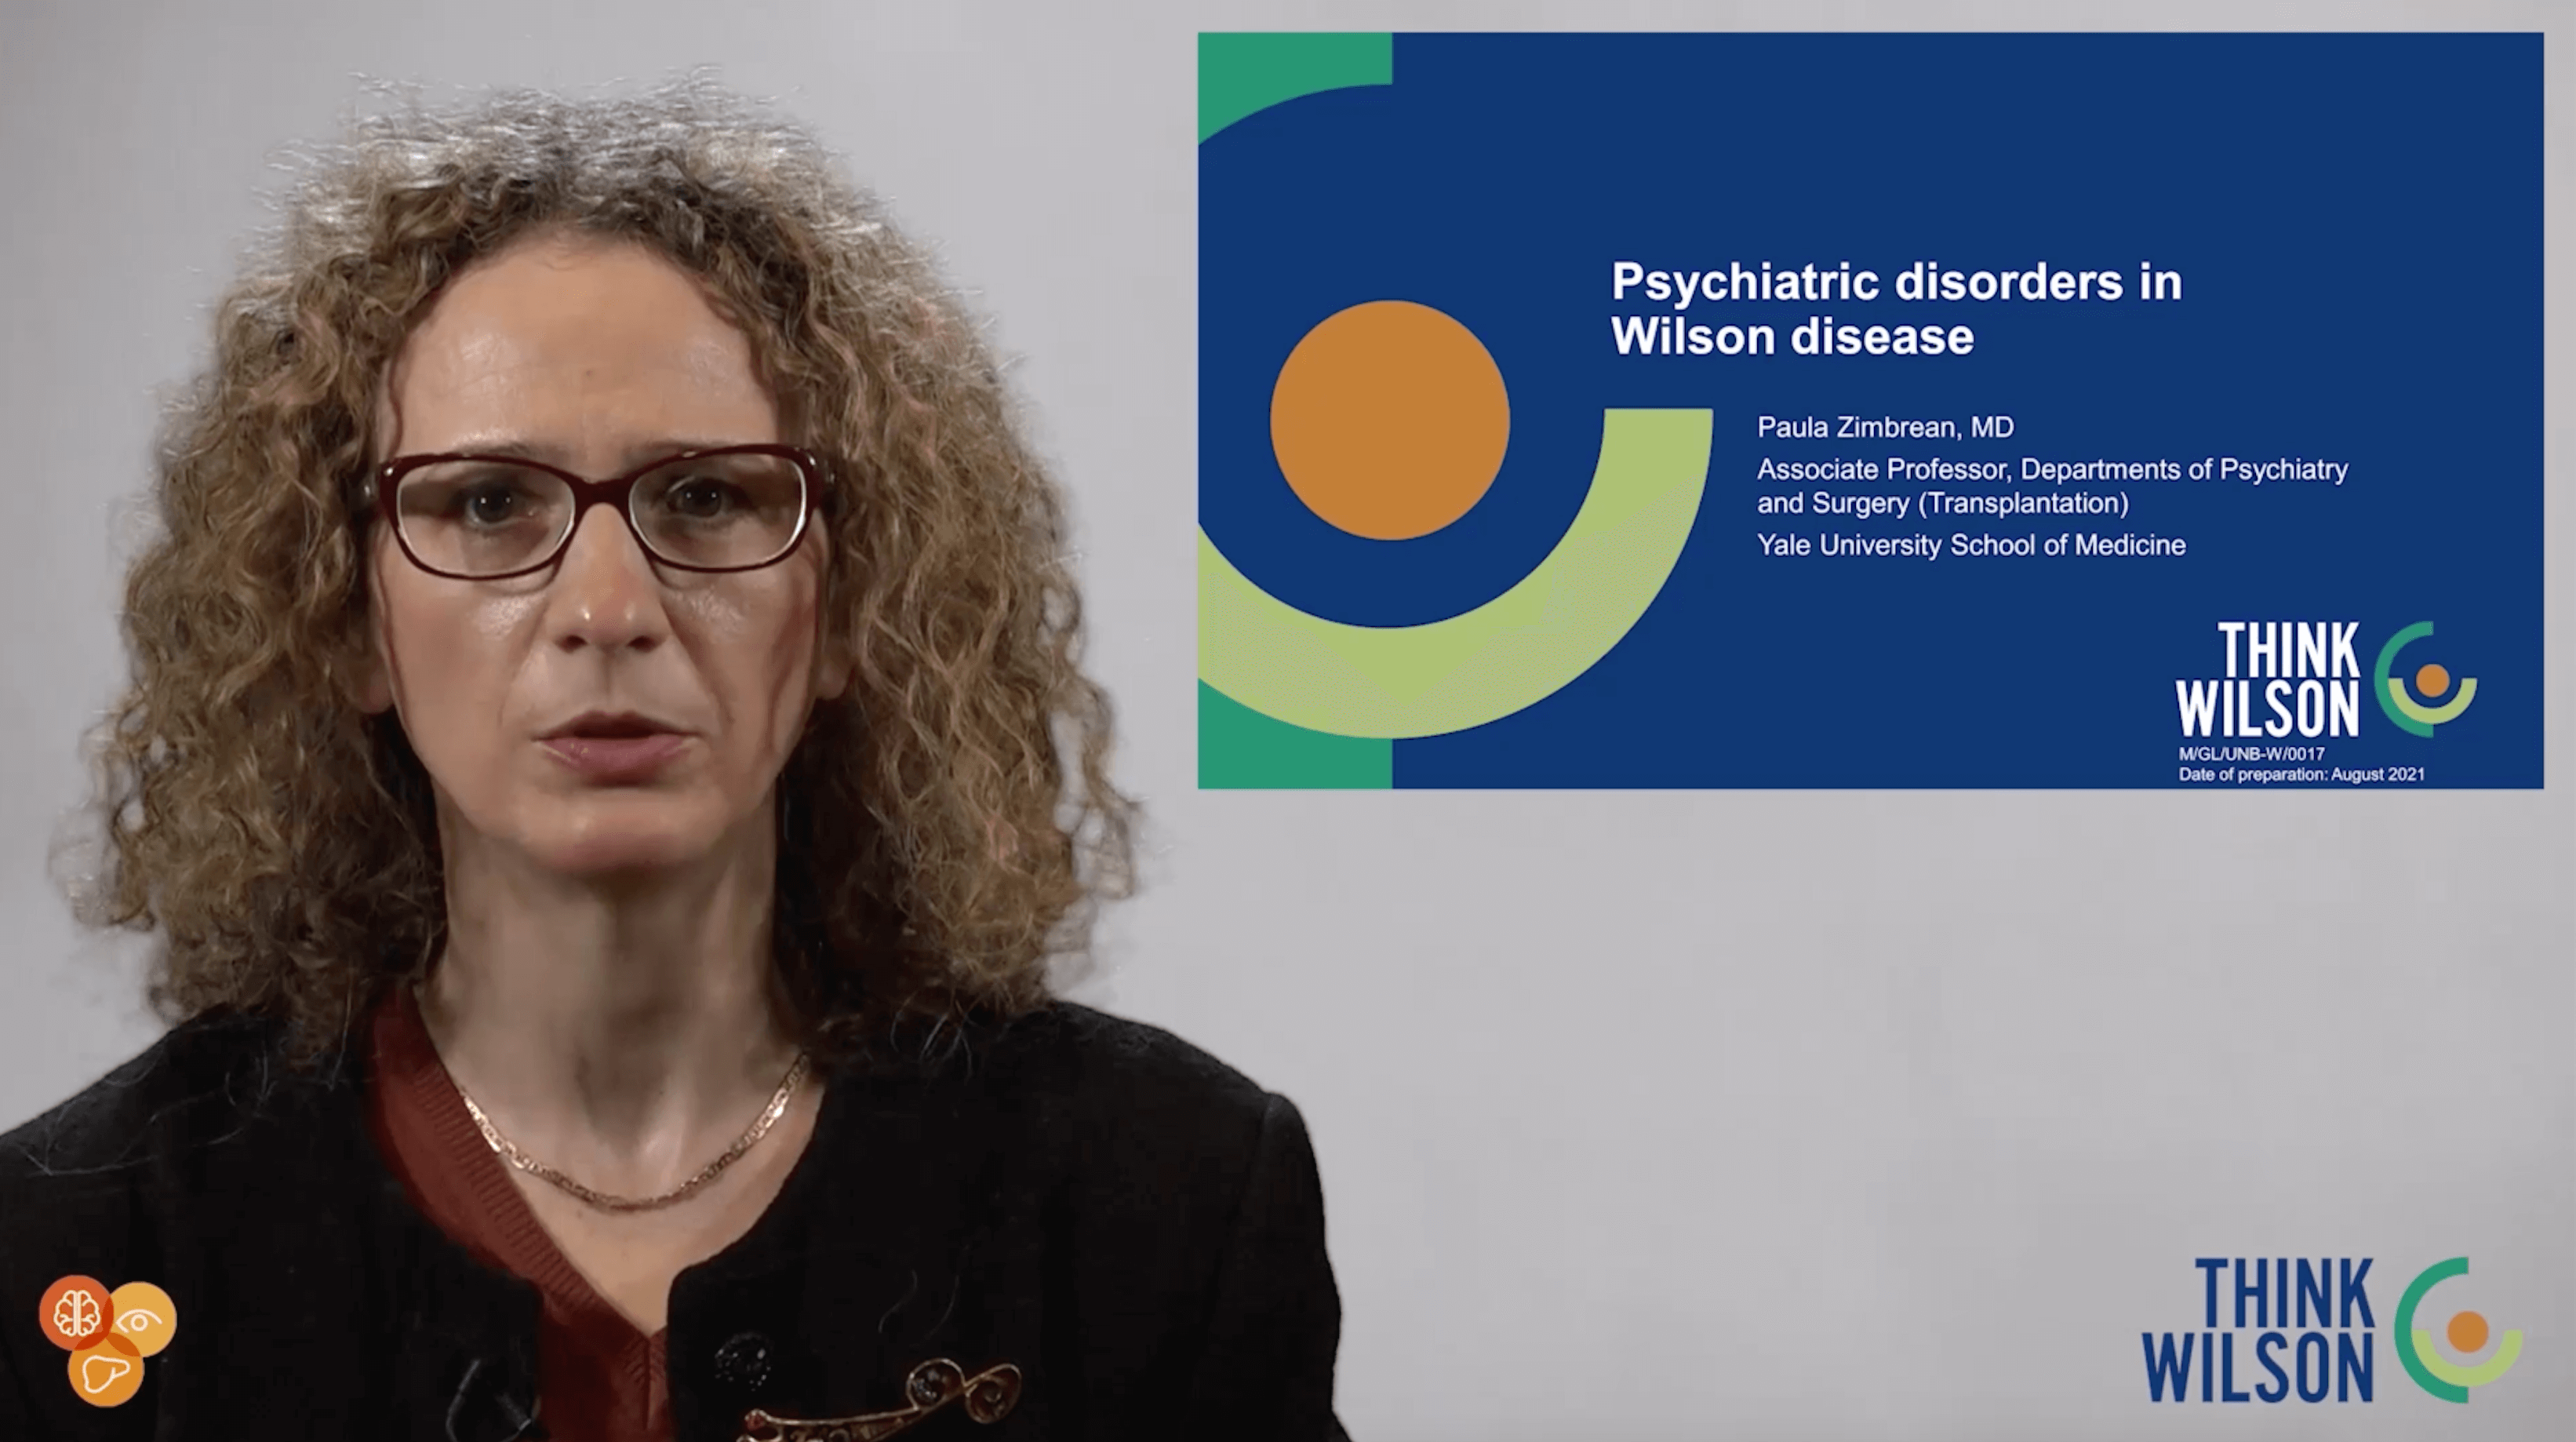 Paula Zimbrean, MD Associate Professor, Departments of Psychiatry and Surgery (Transplantation) Yale University School of Medicine explaining the Psychiatric disorders in Wilson disease